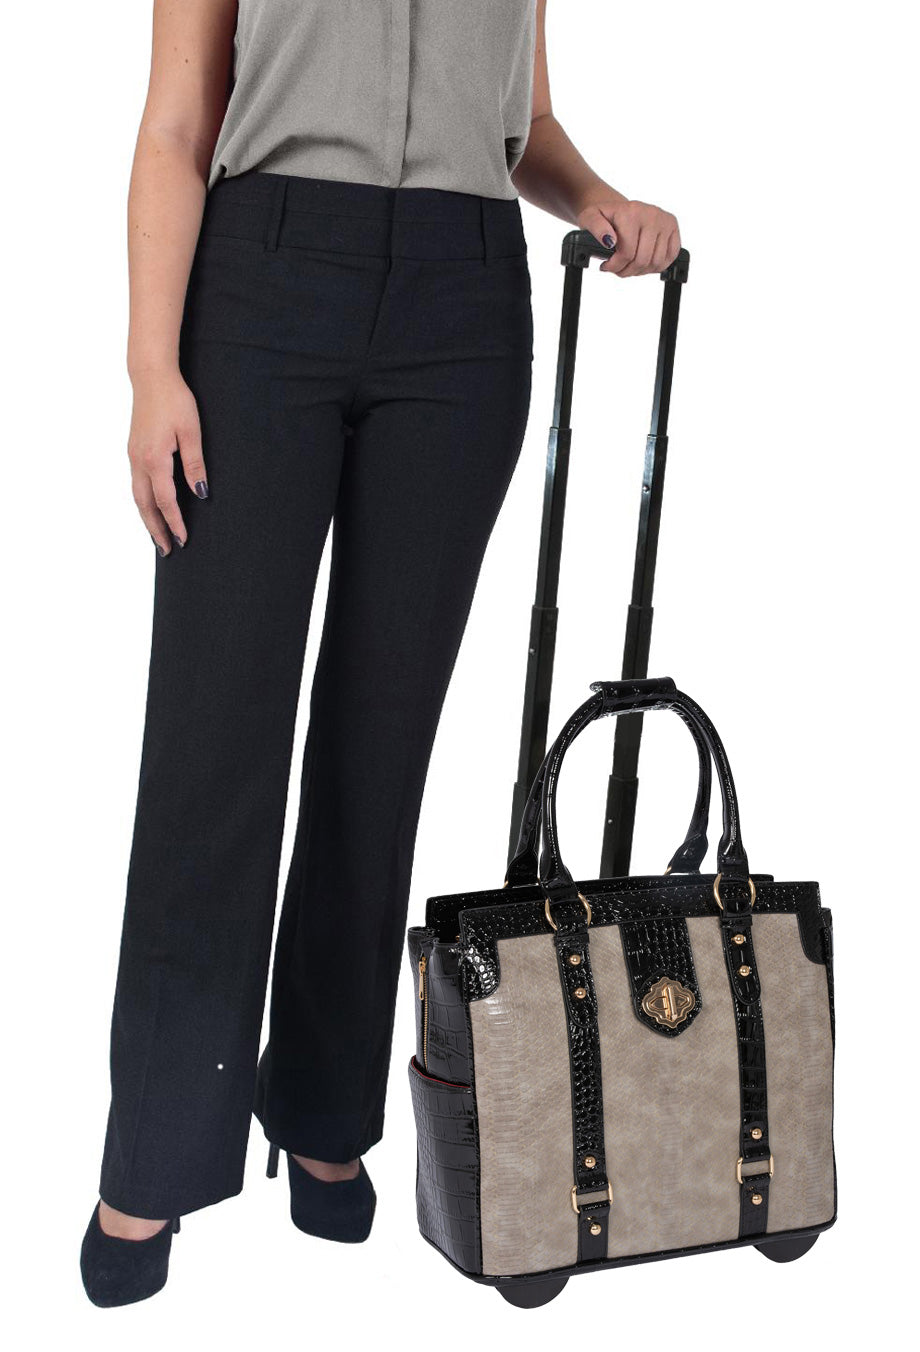 PARISIAN Python & Alligator Rolling Laptop Carryall Bag, JKM and Company -  Custom Rolling Handbags